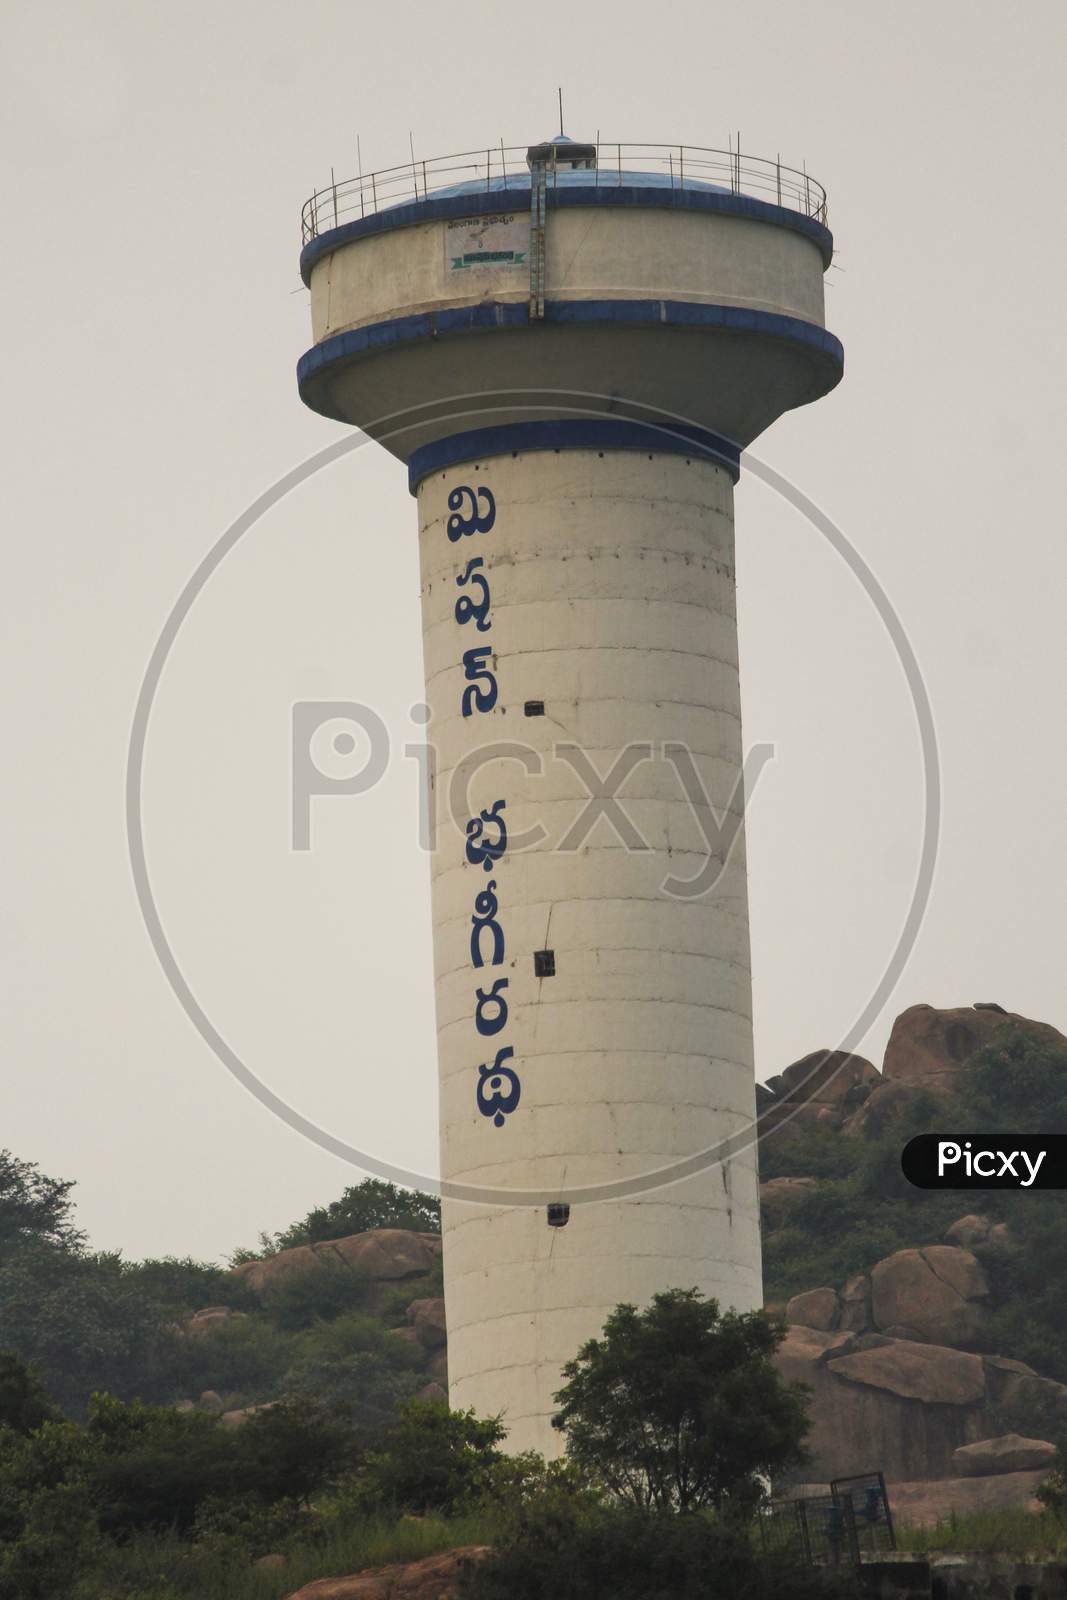 Telangana's Mission Bhagiratha overhead water tank.